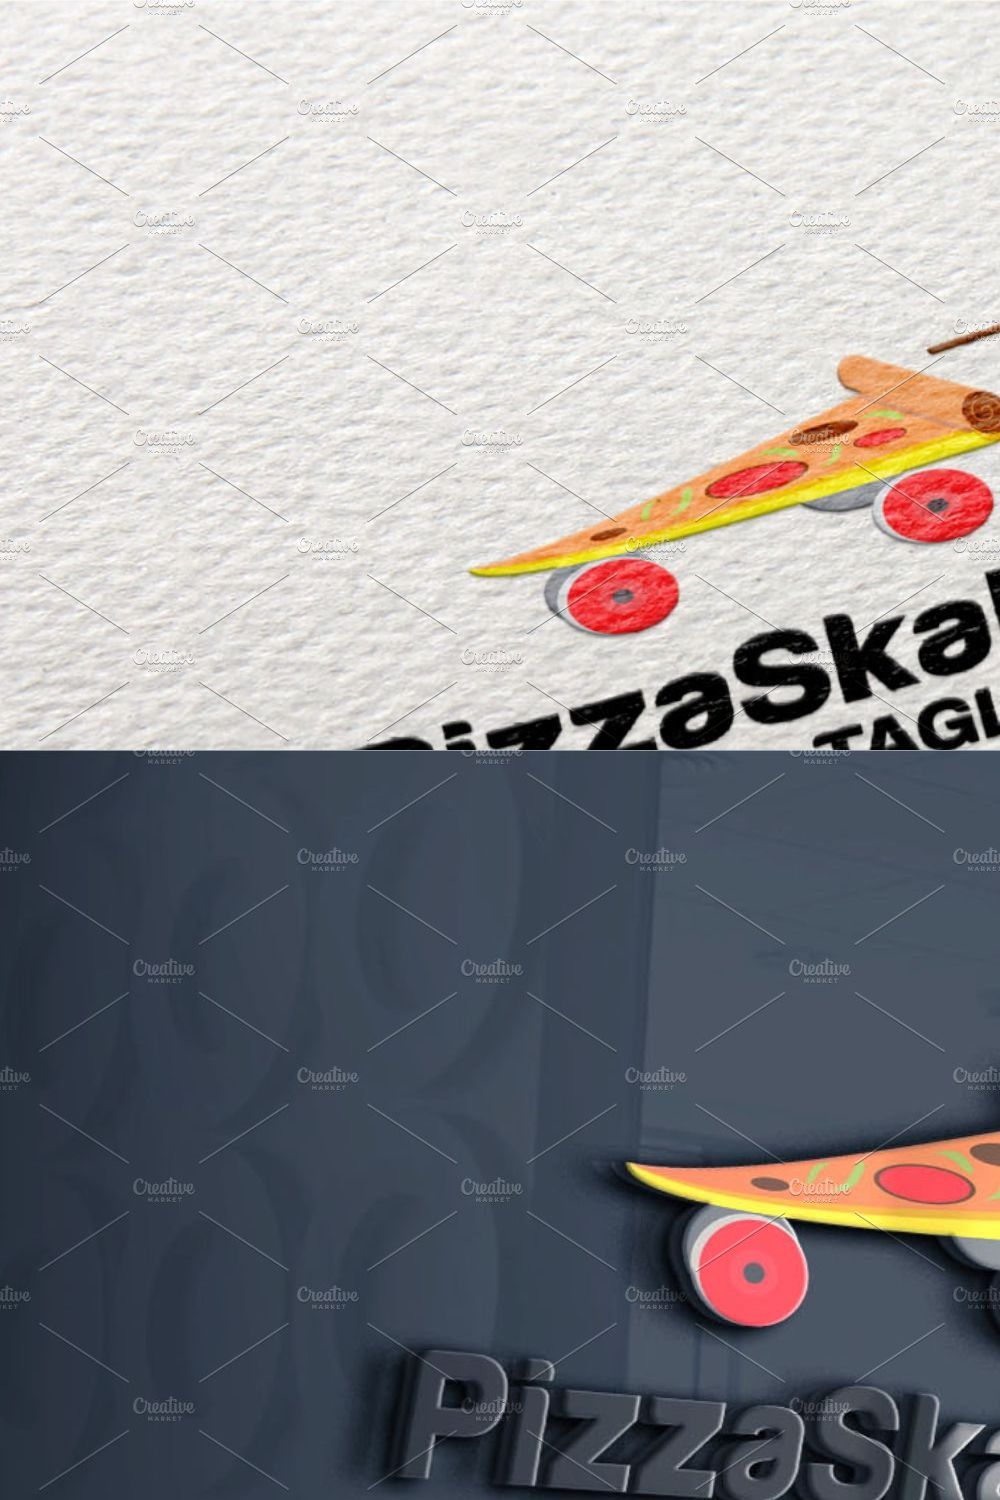 Skate Pizza logo pinterest preview image.